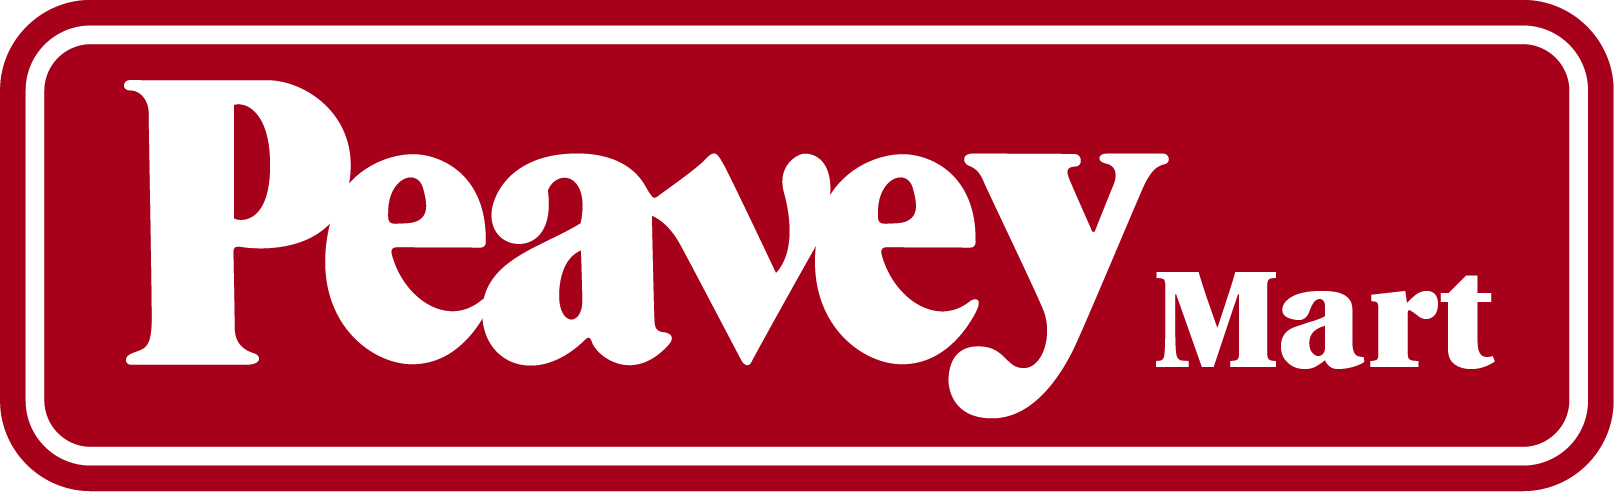 peavey-mart-logo1